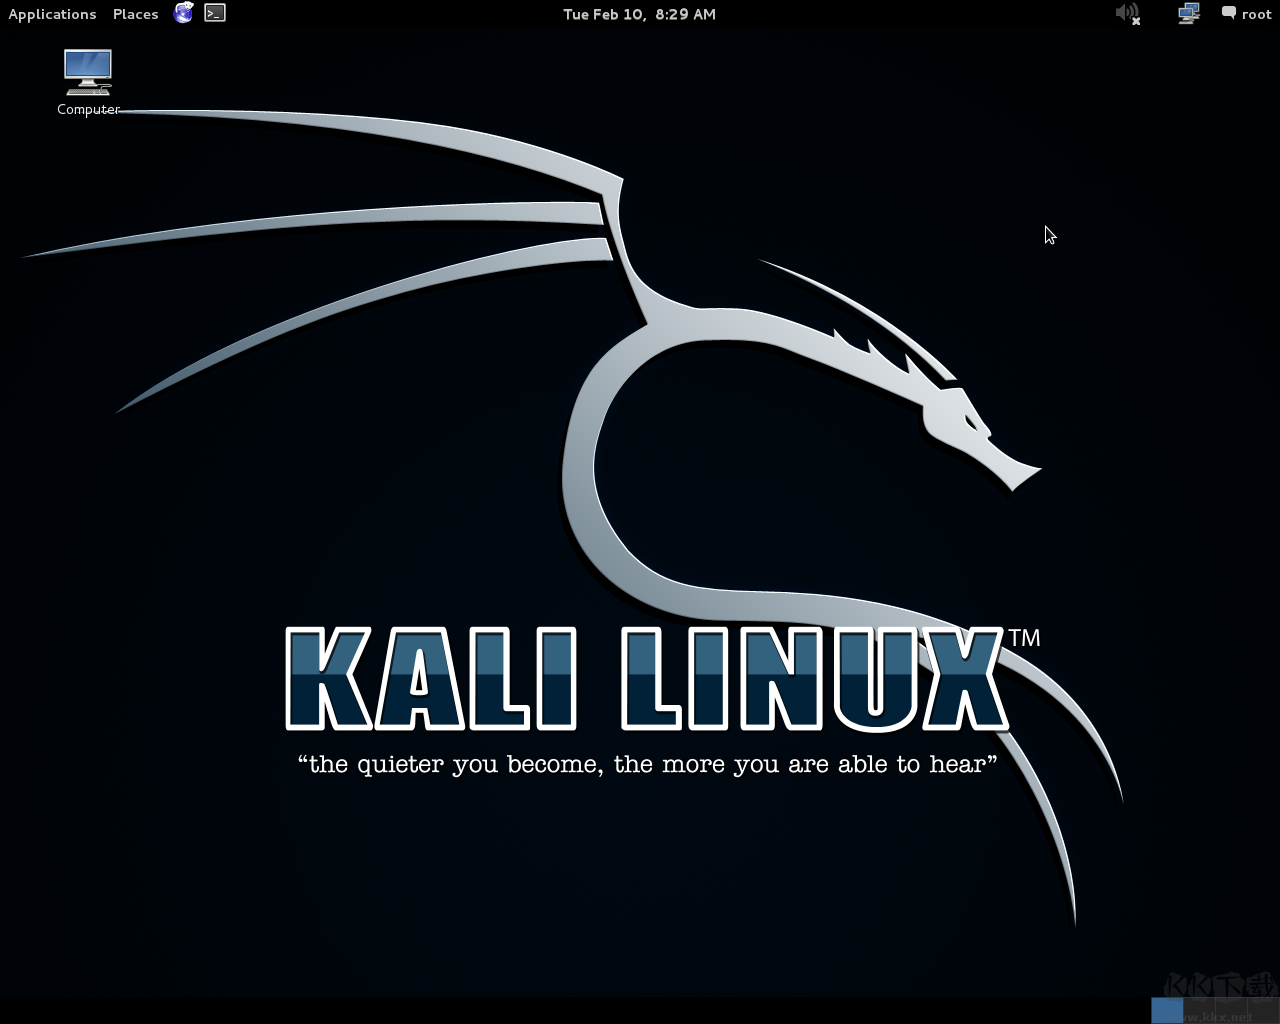 kali-linux 2020.4-installer-amd64